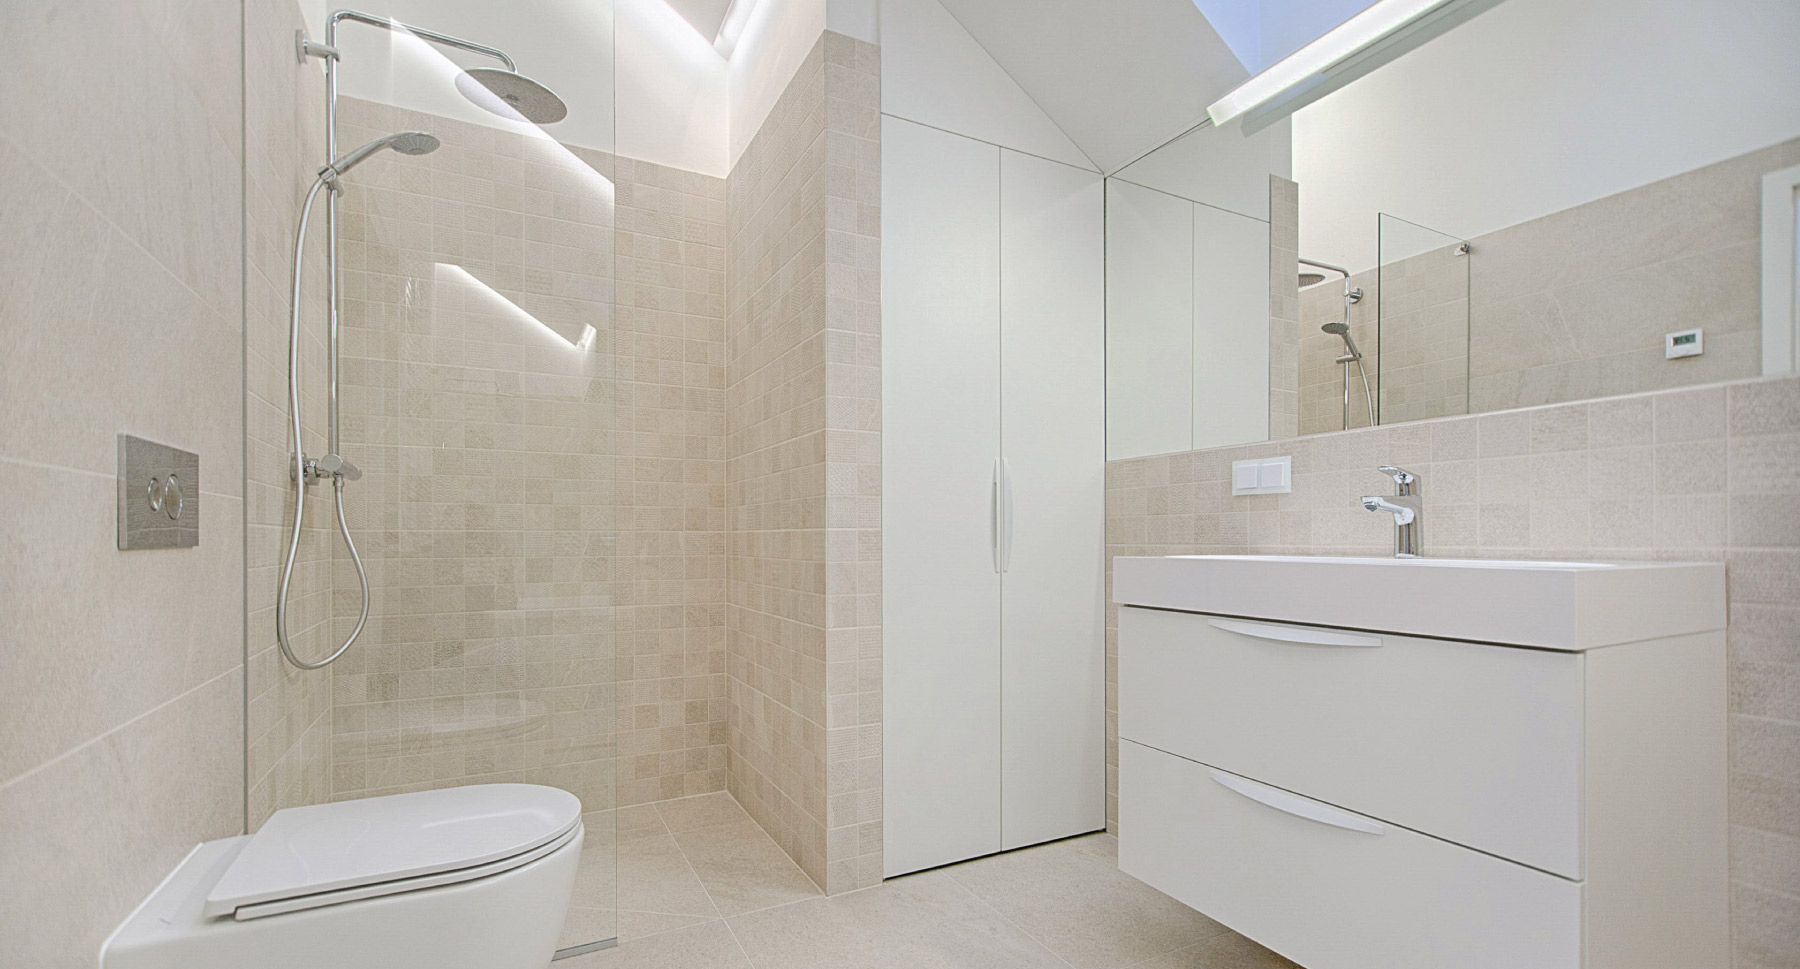 Bathroom refurbishment in South Ockendon